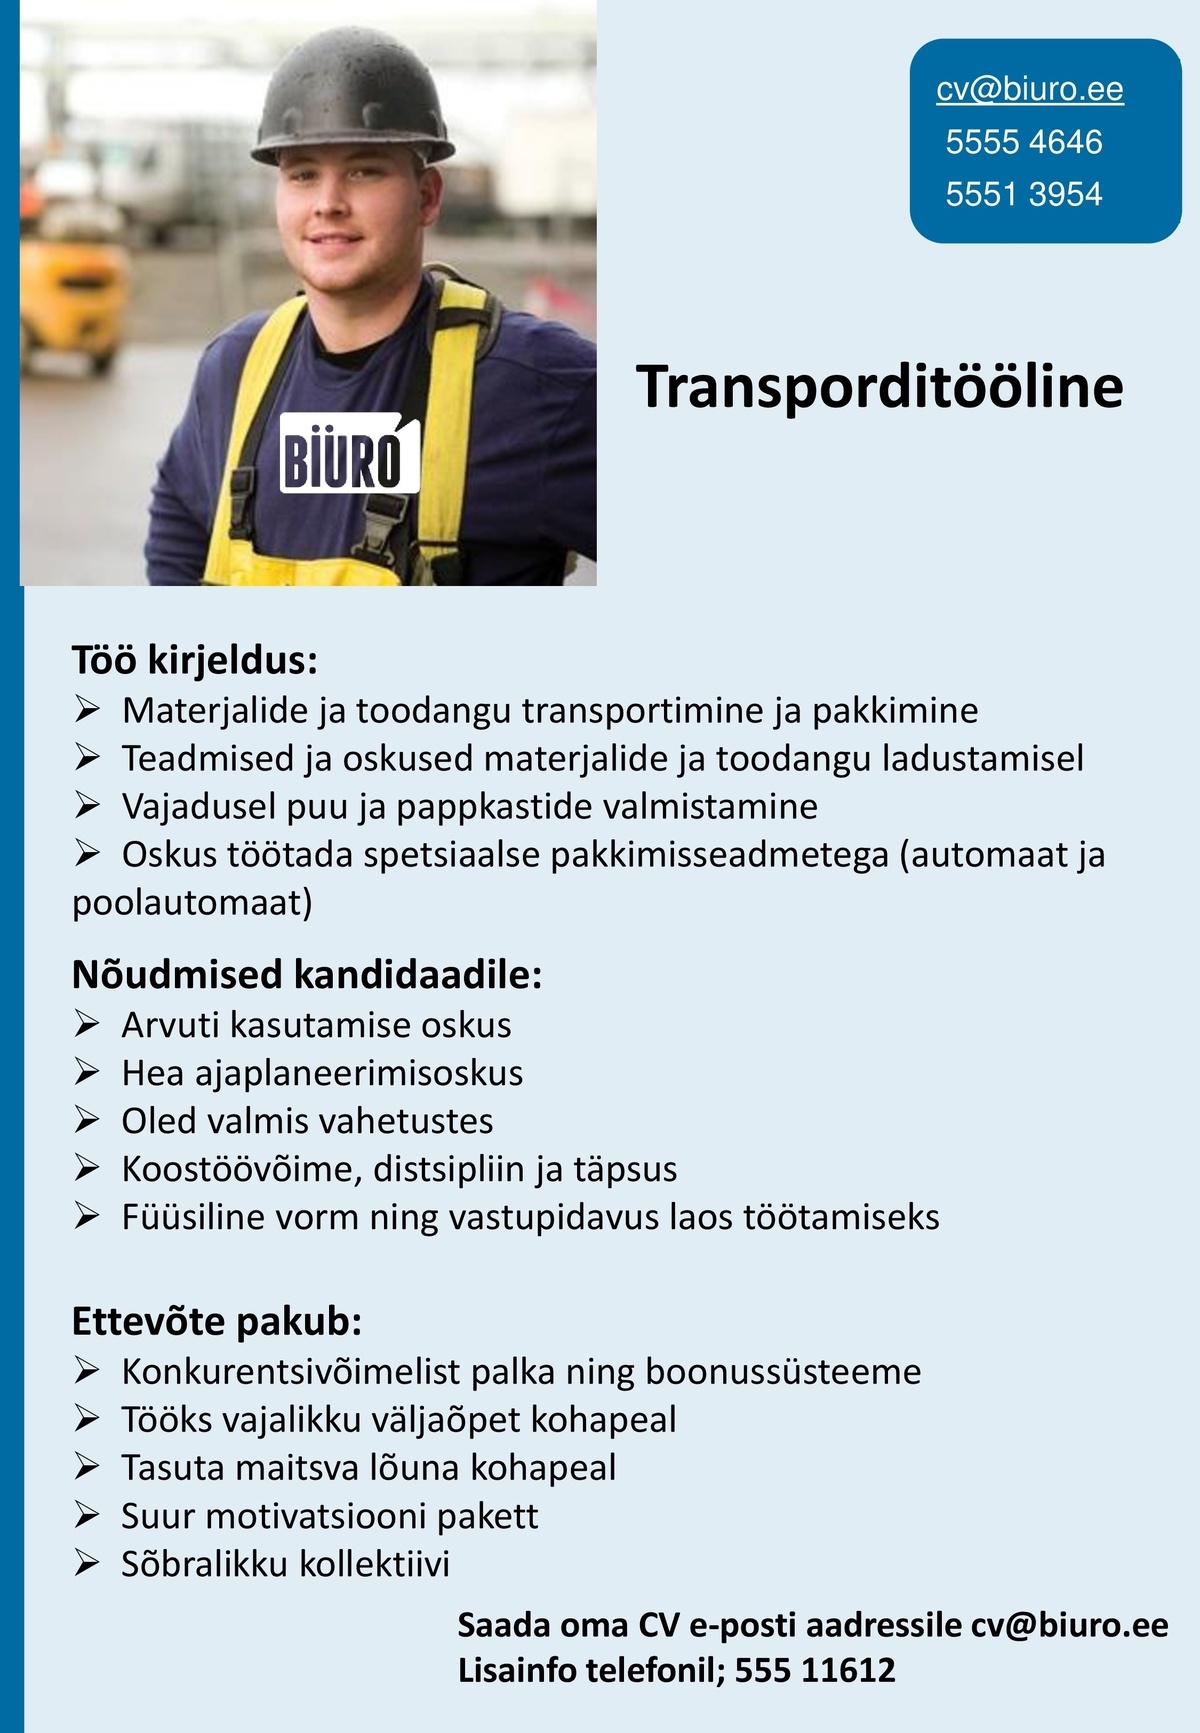 Biuro OÜ Transporditööline